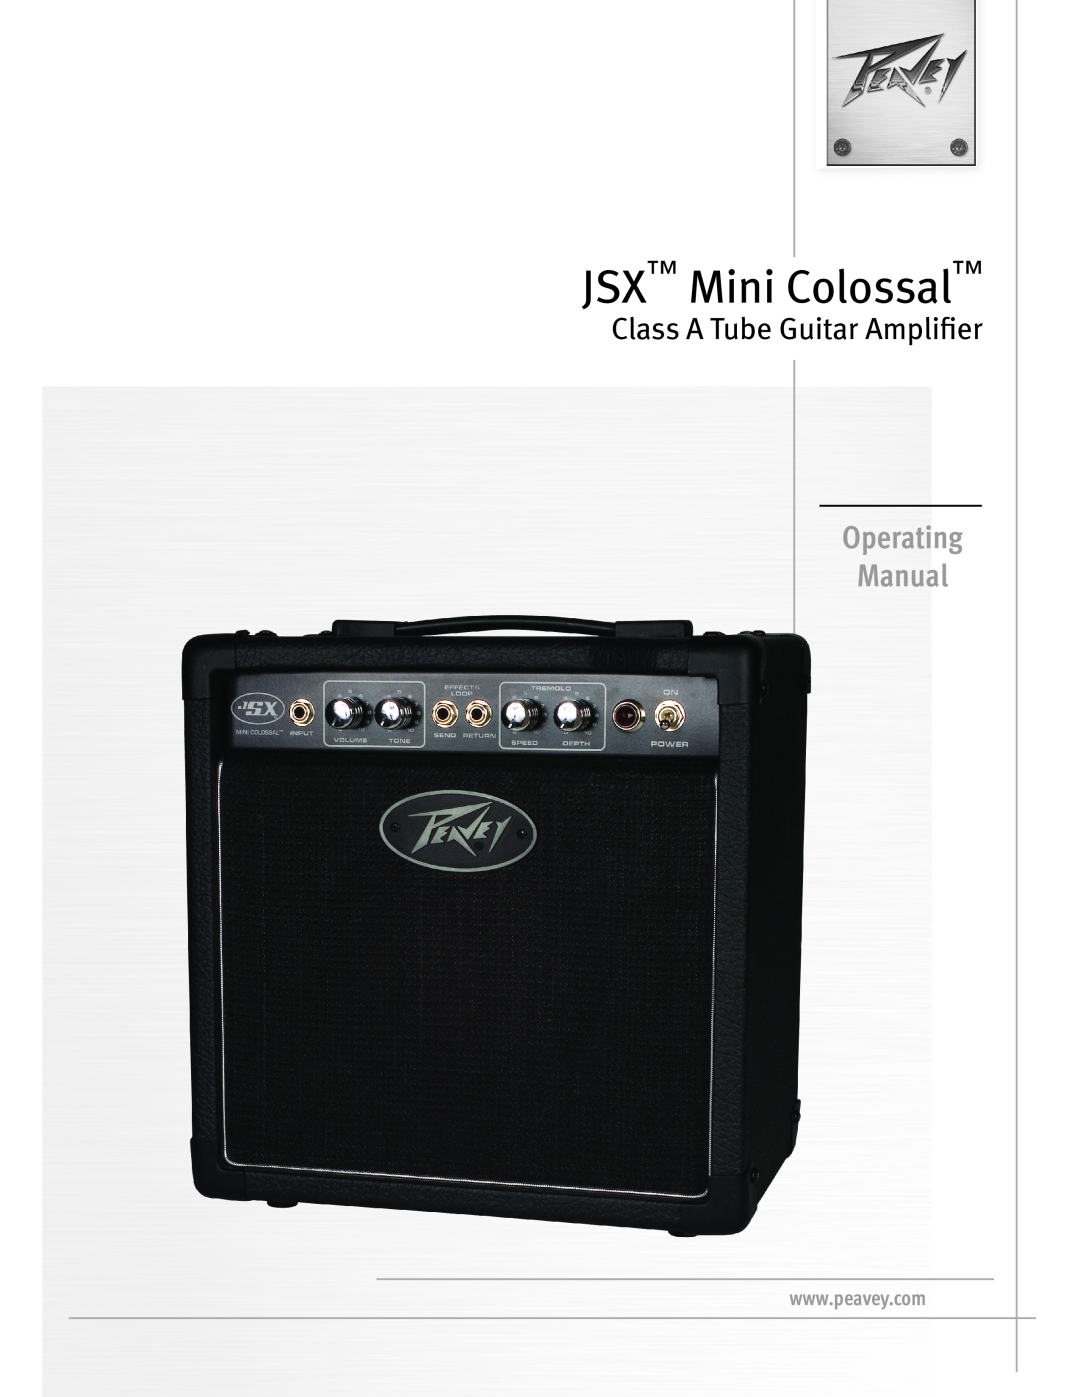 Peavey JSXTM Mini ColossalTM Class A Tube Guitar Amplifier manual JSX Mini Colossal, Operating Manual 